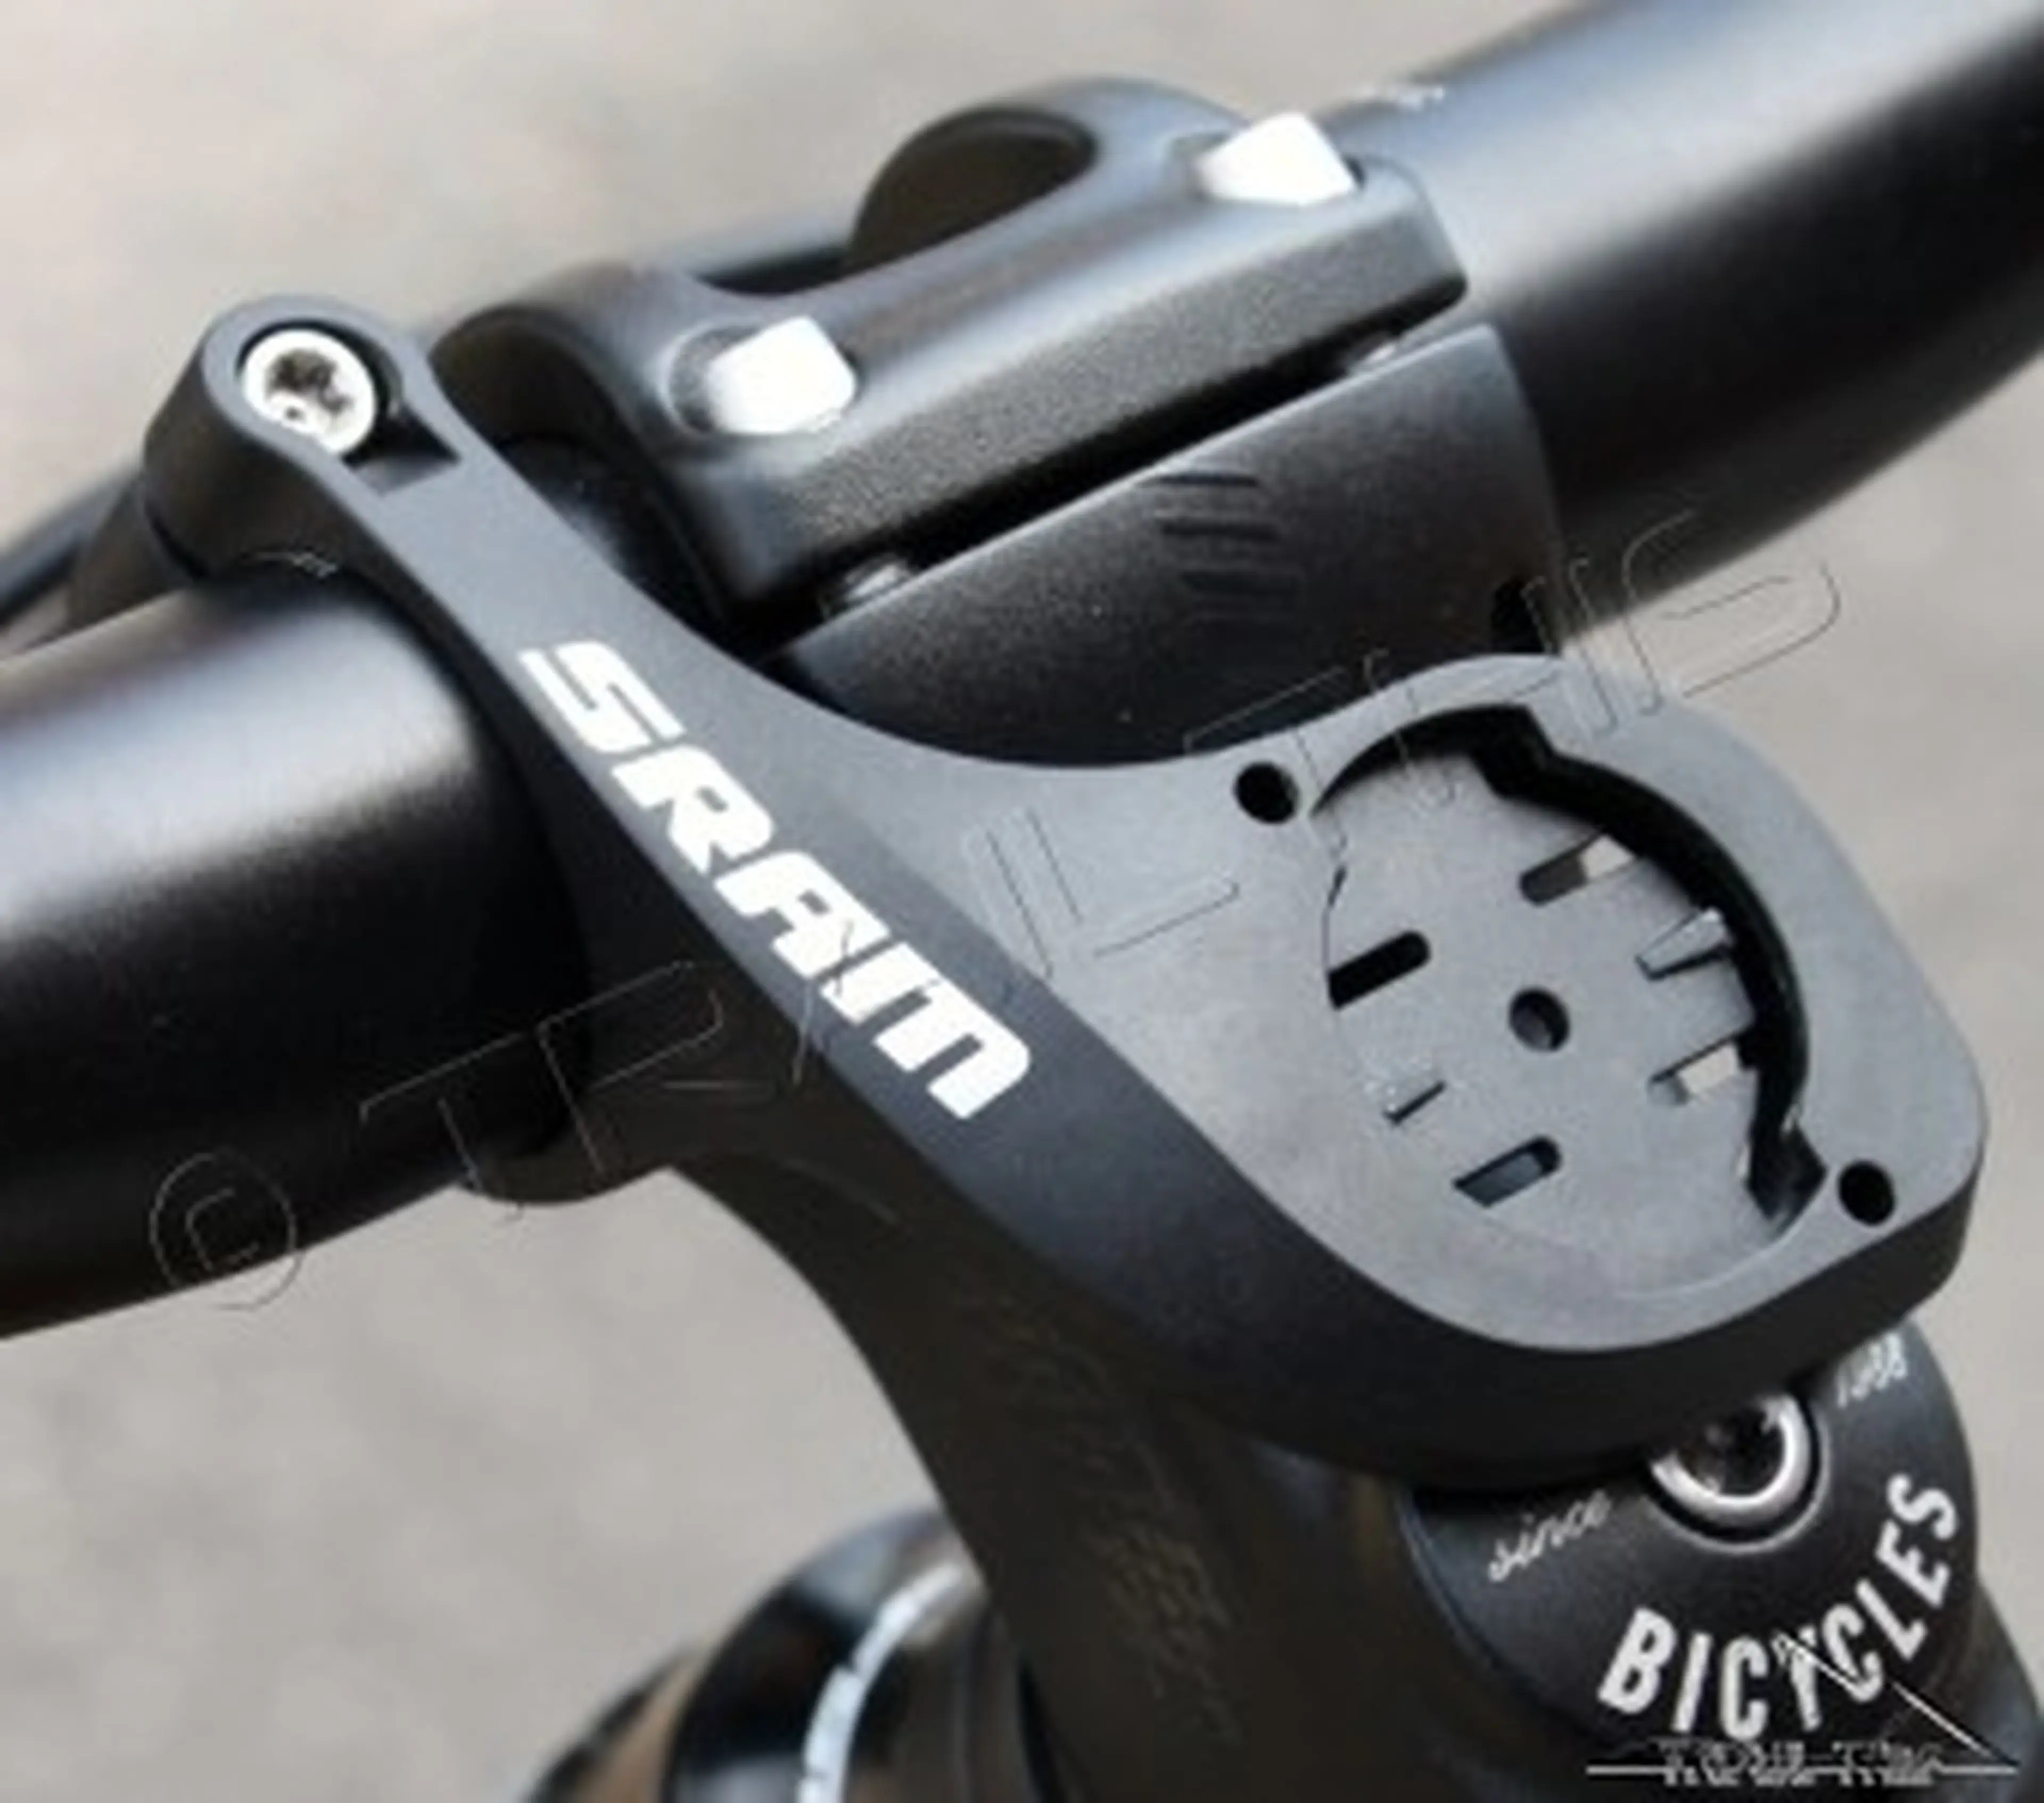 Image Suport bicicleta Sram gps Garmin / Bryton / Igsport